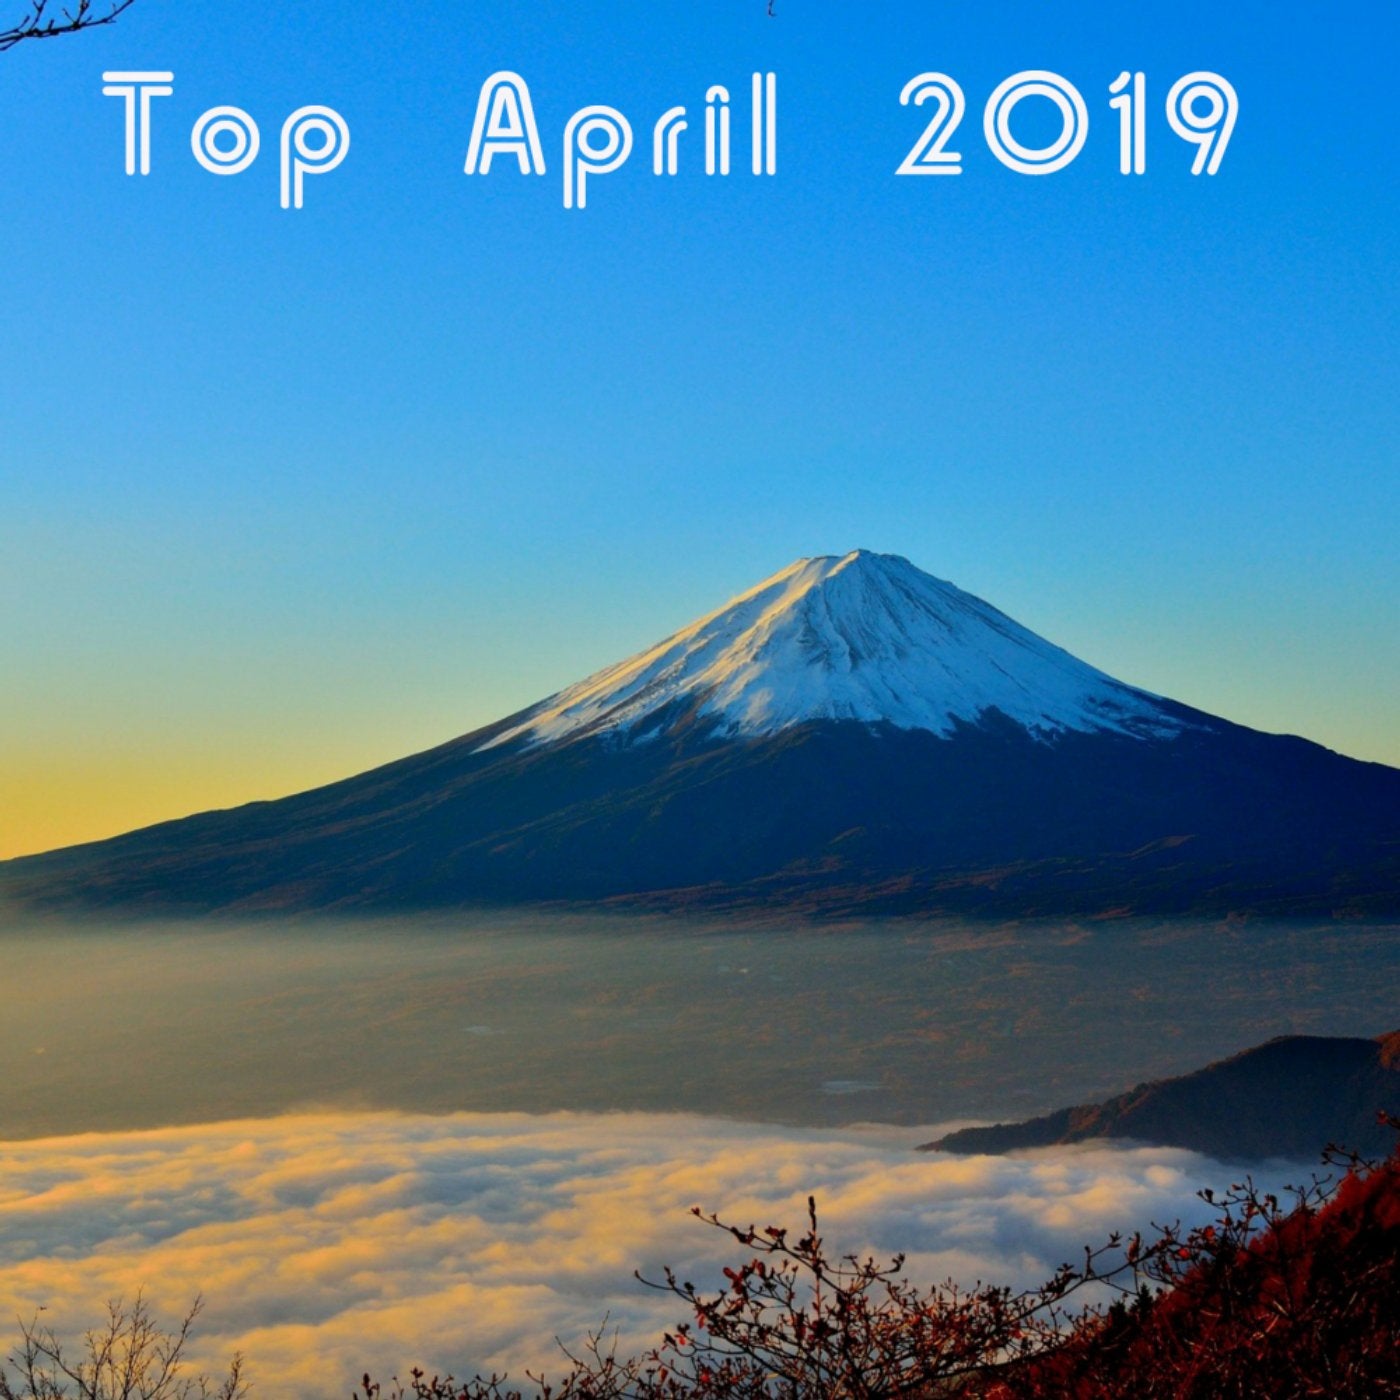 Top April 2019